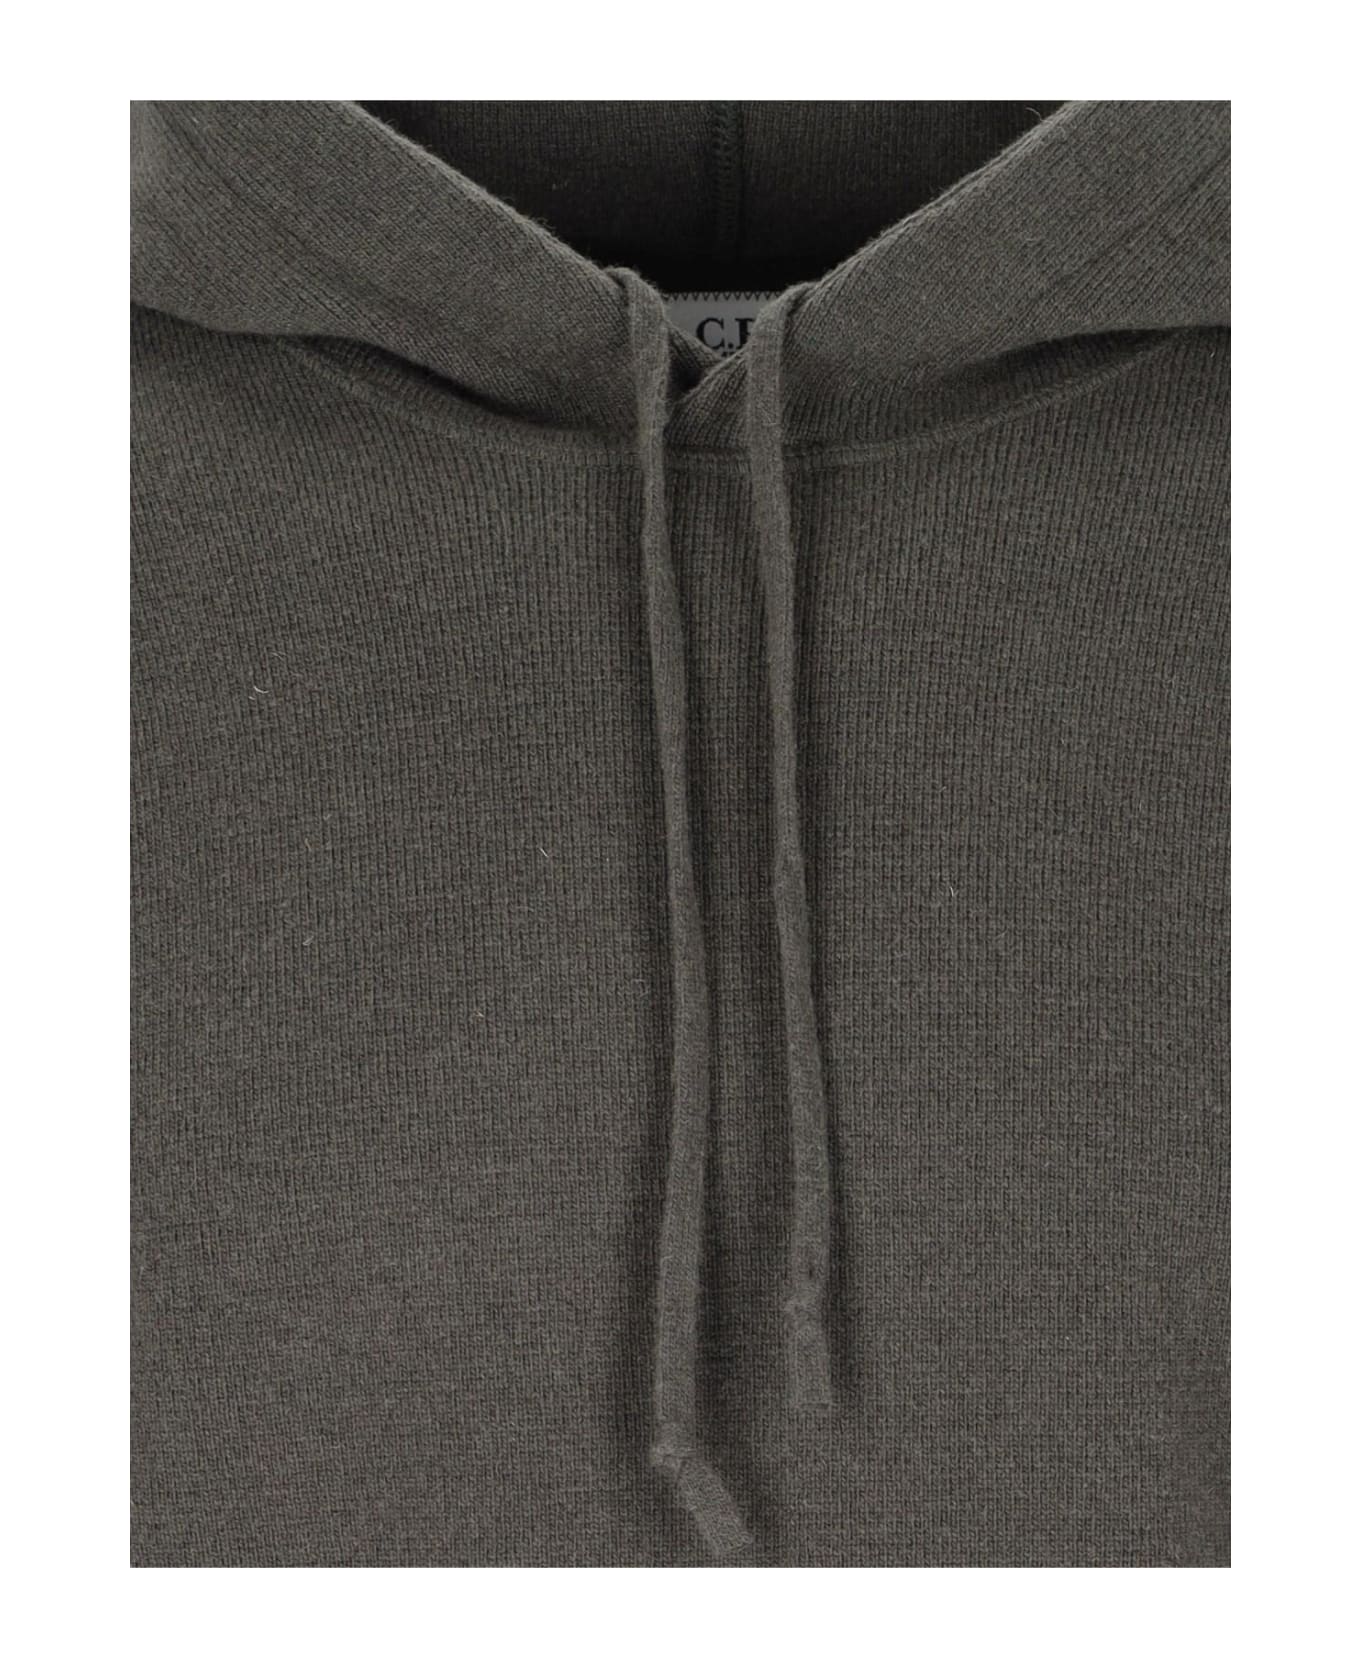 C.P. Company 'lens' Knit Sweatshirt - Verde ニットウェア